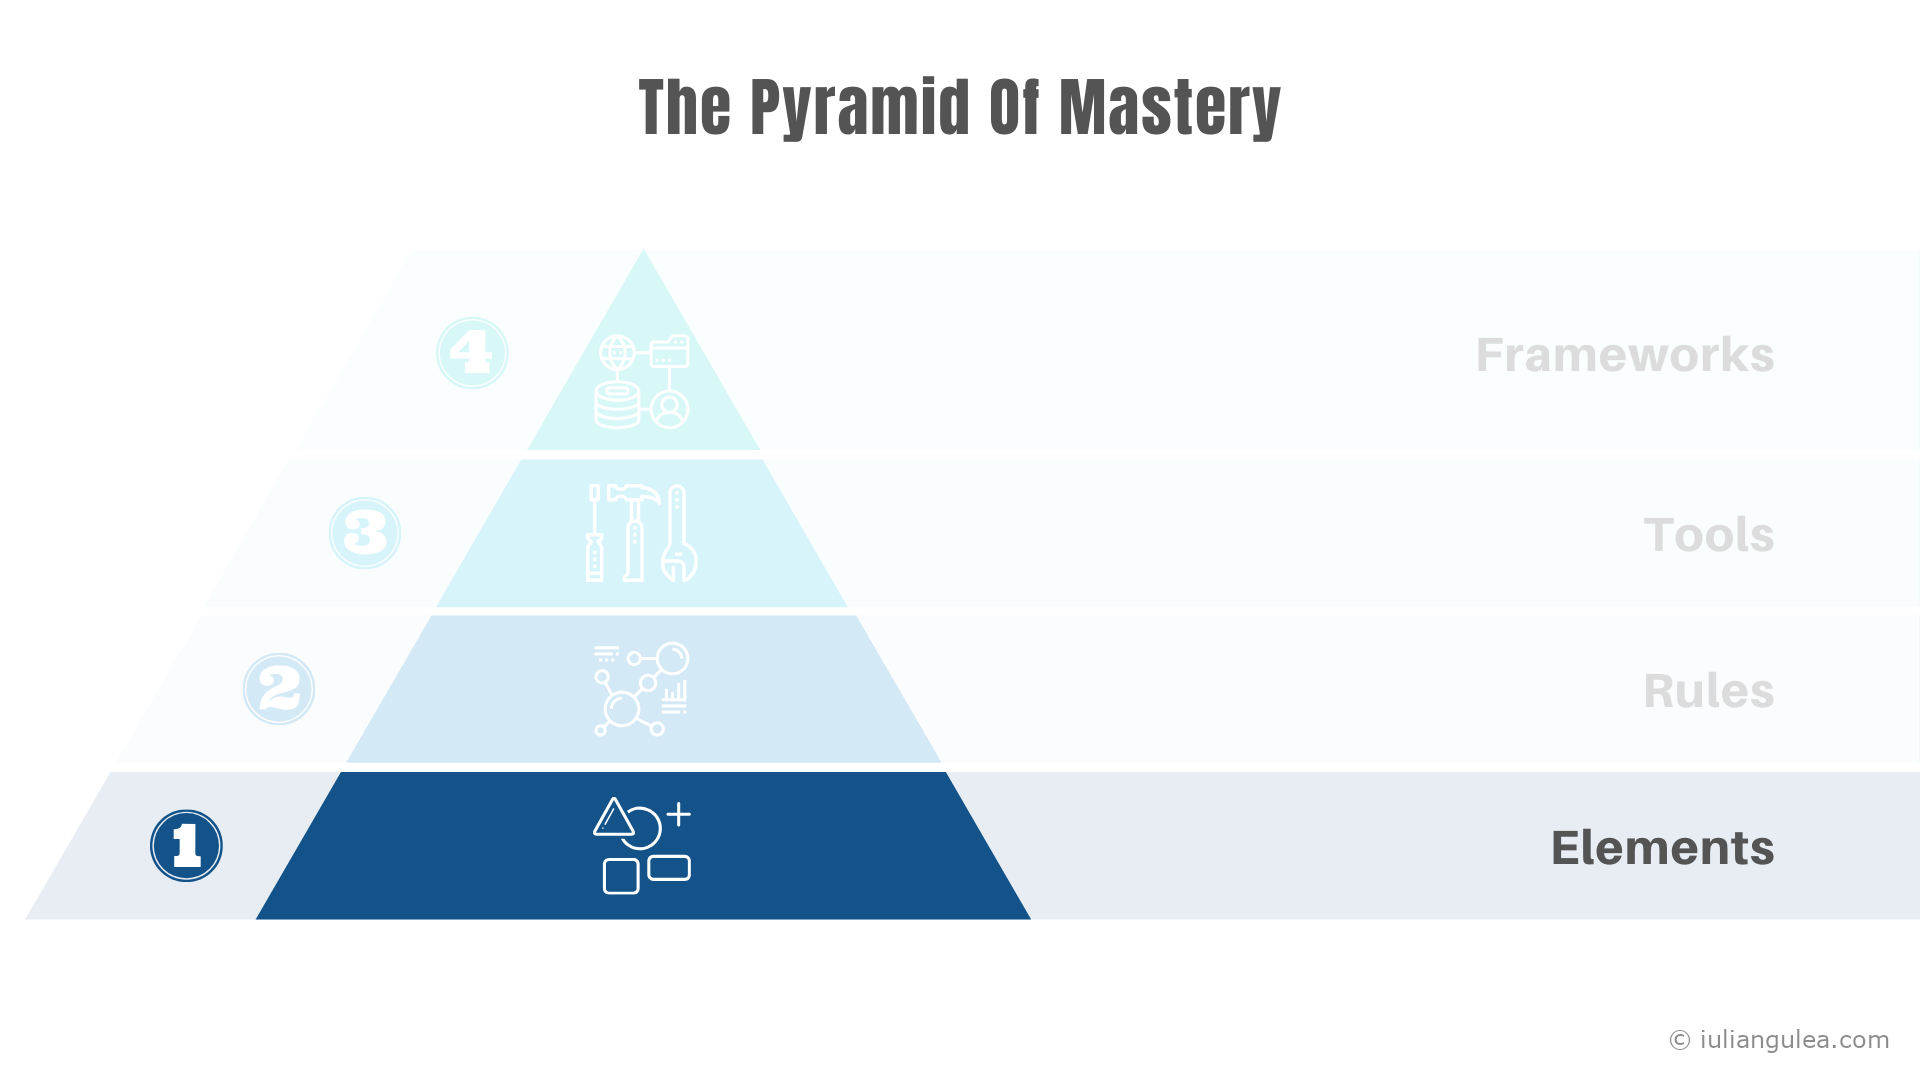 Pyramid of Mastery - Elements